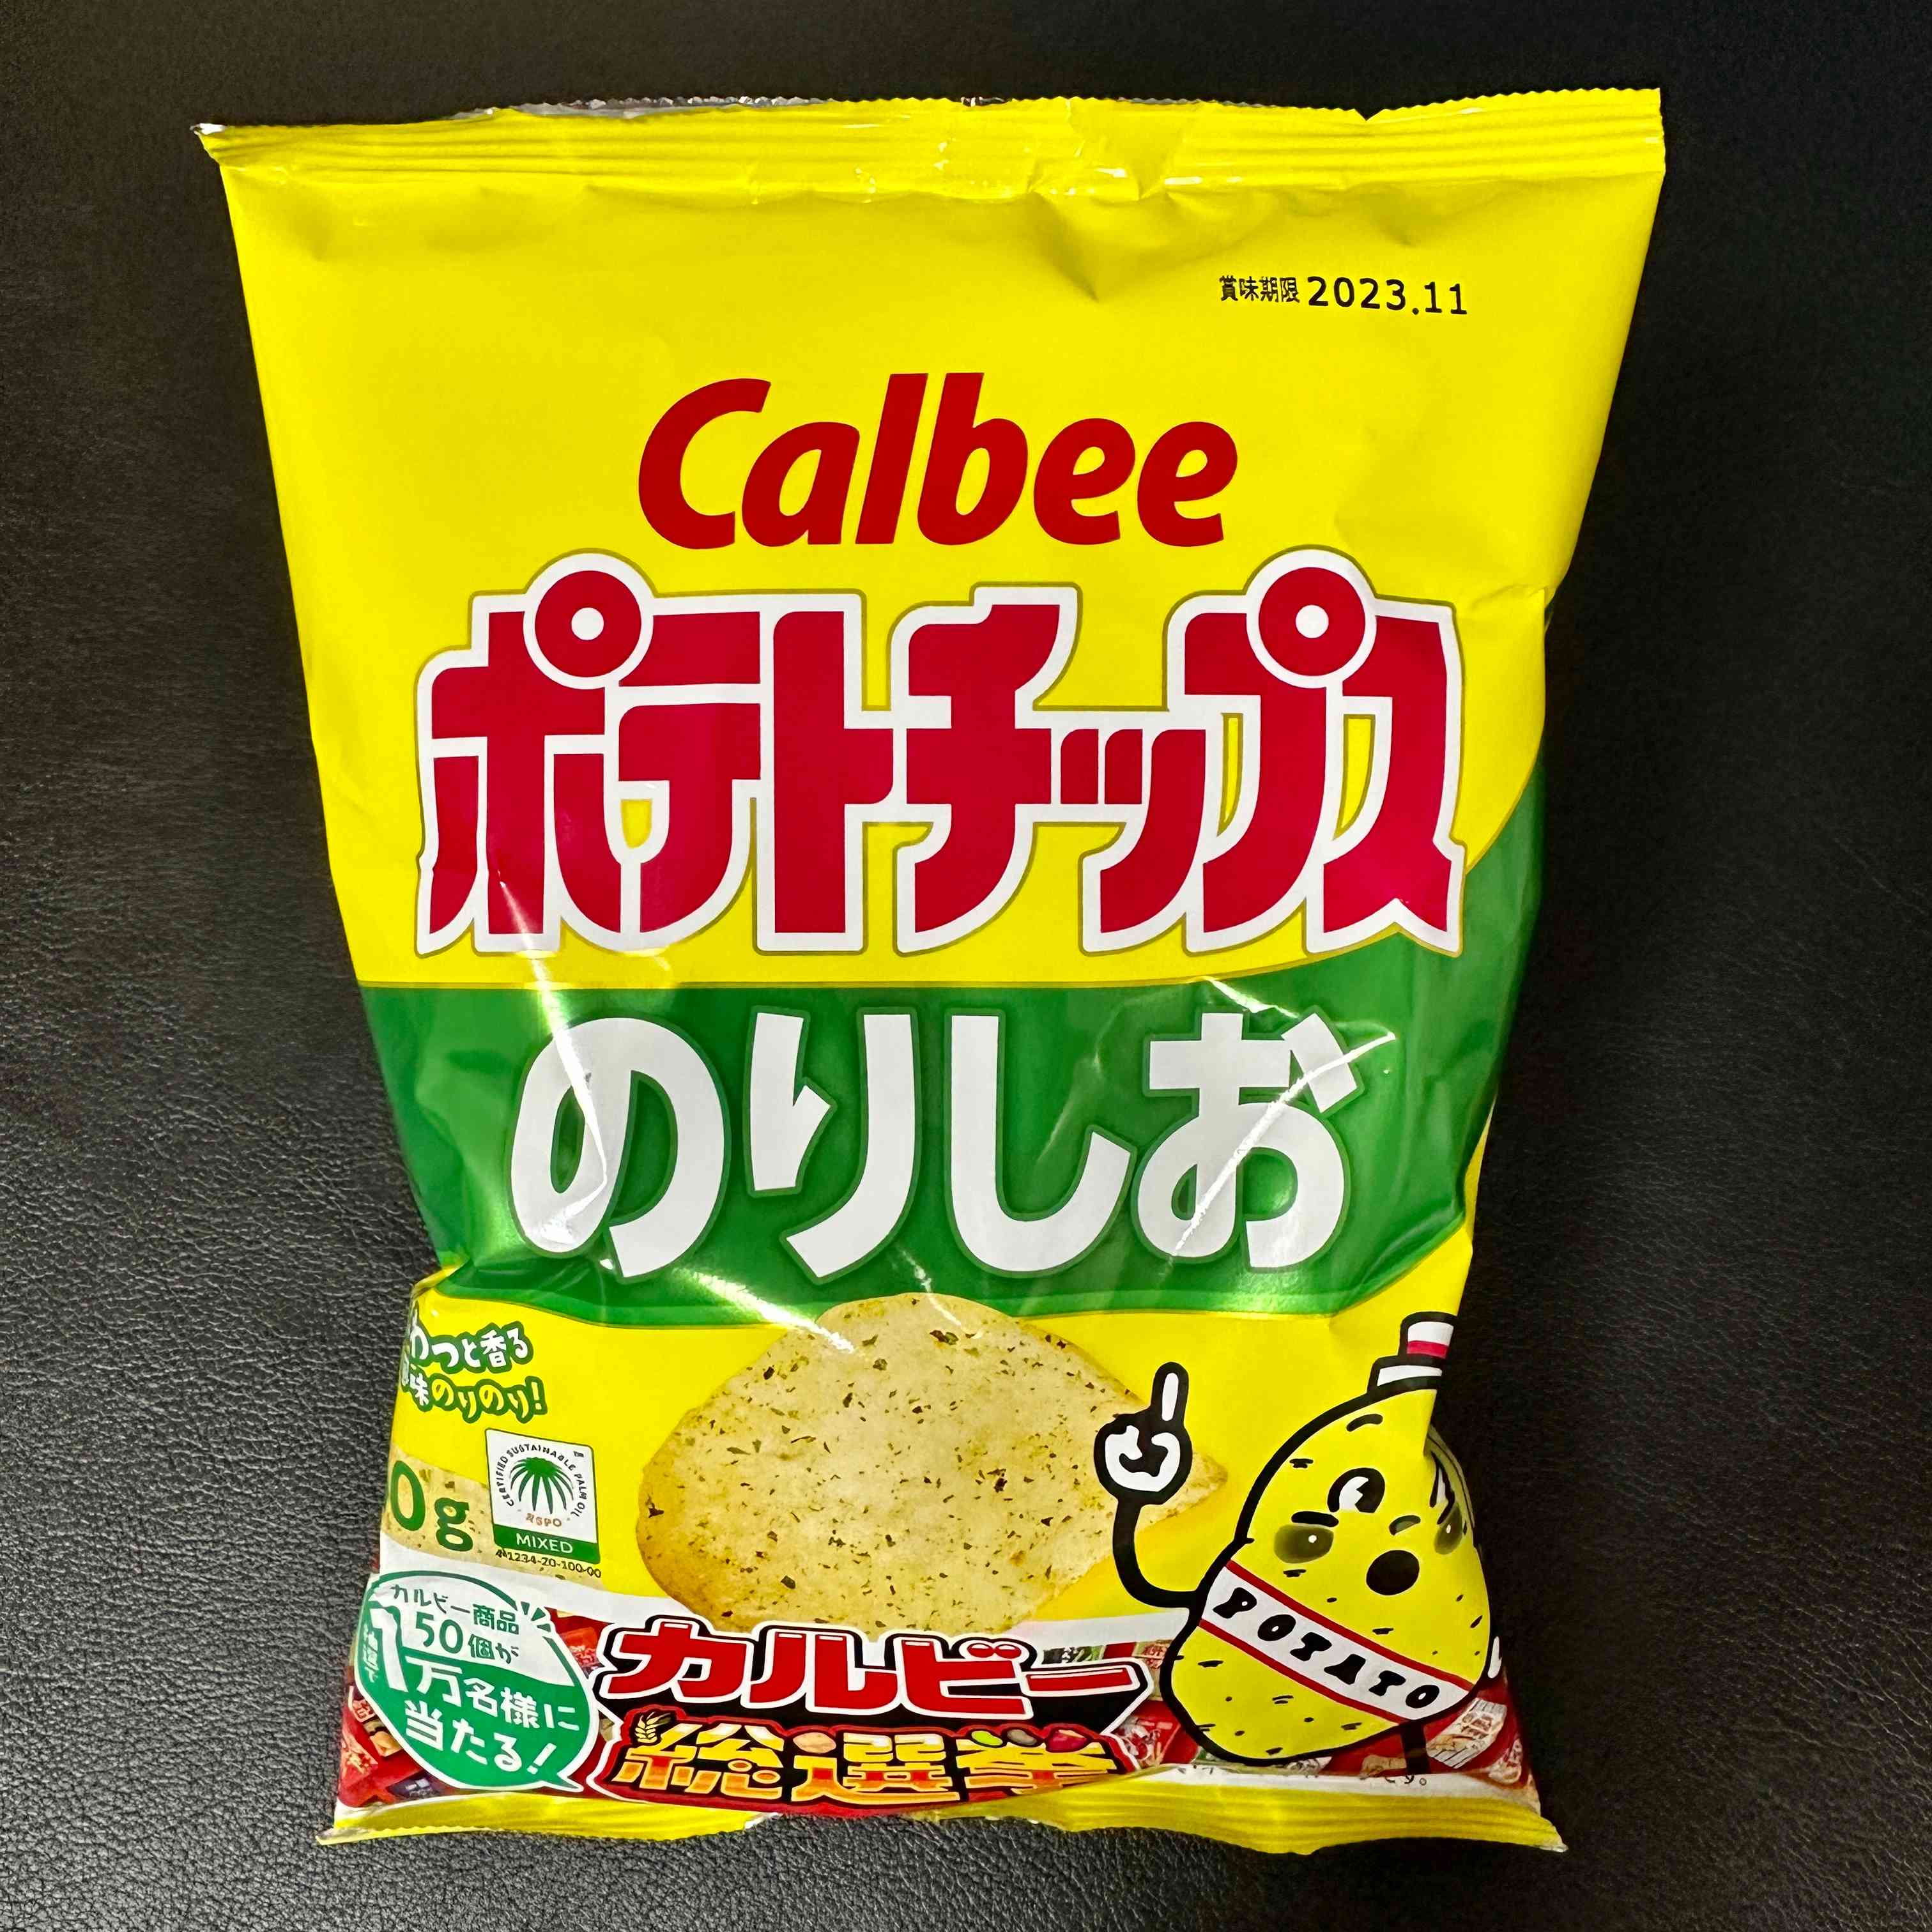 Potato Chips: Seaweed & Salt